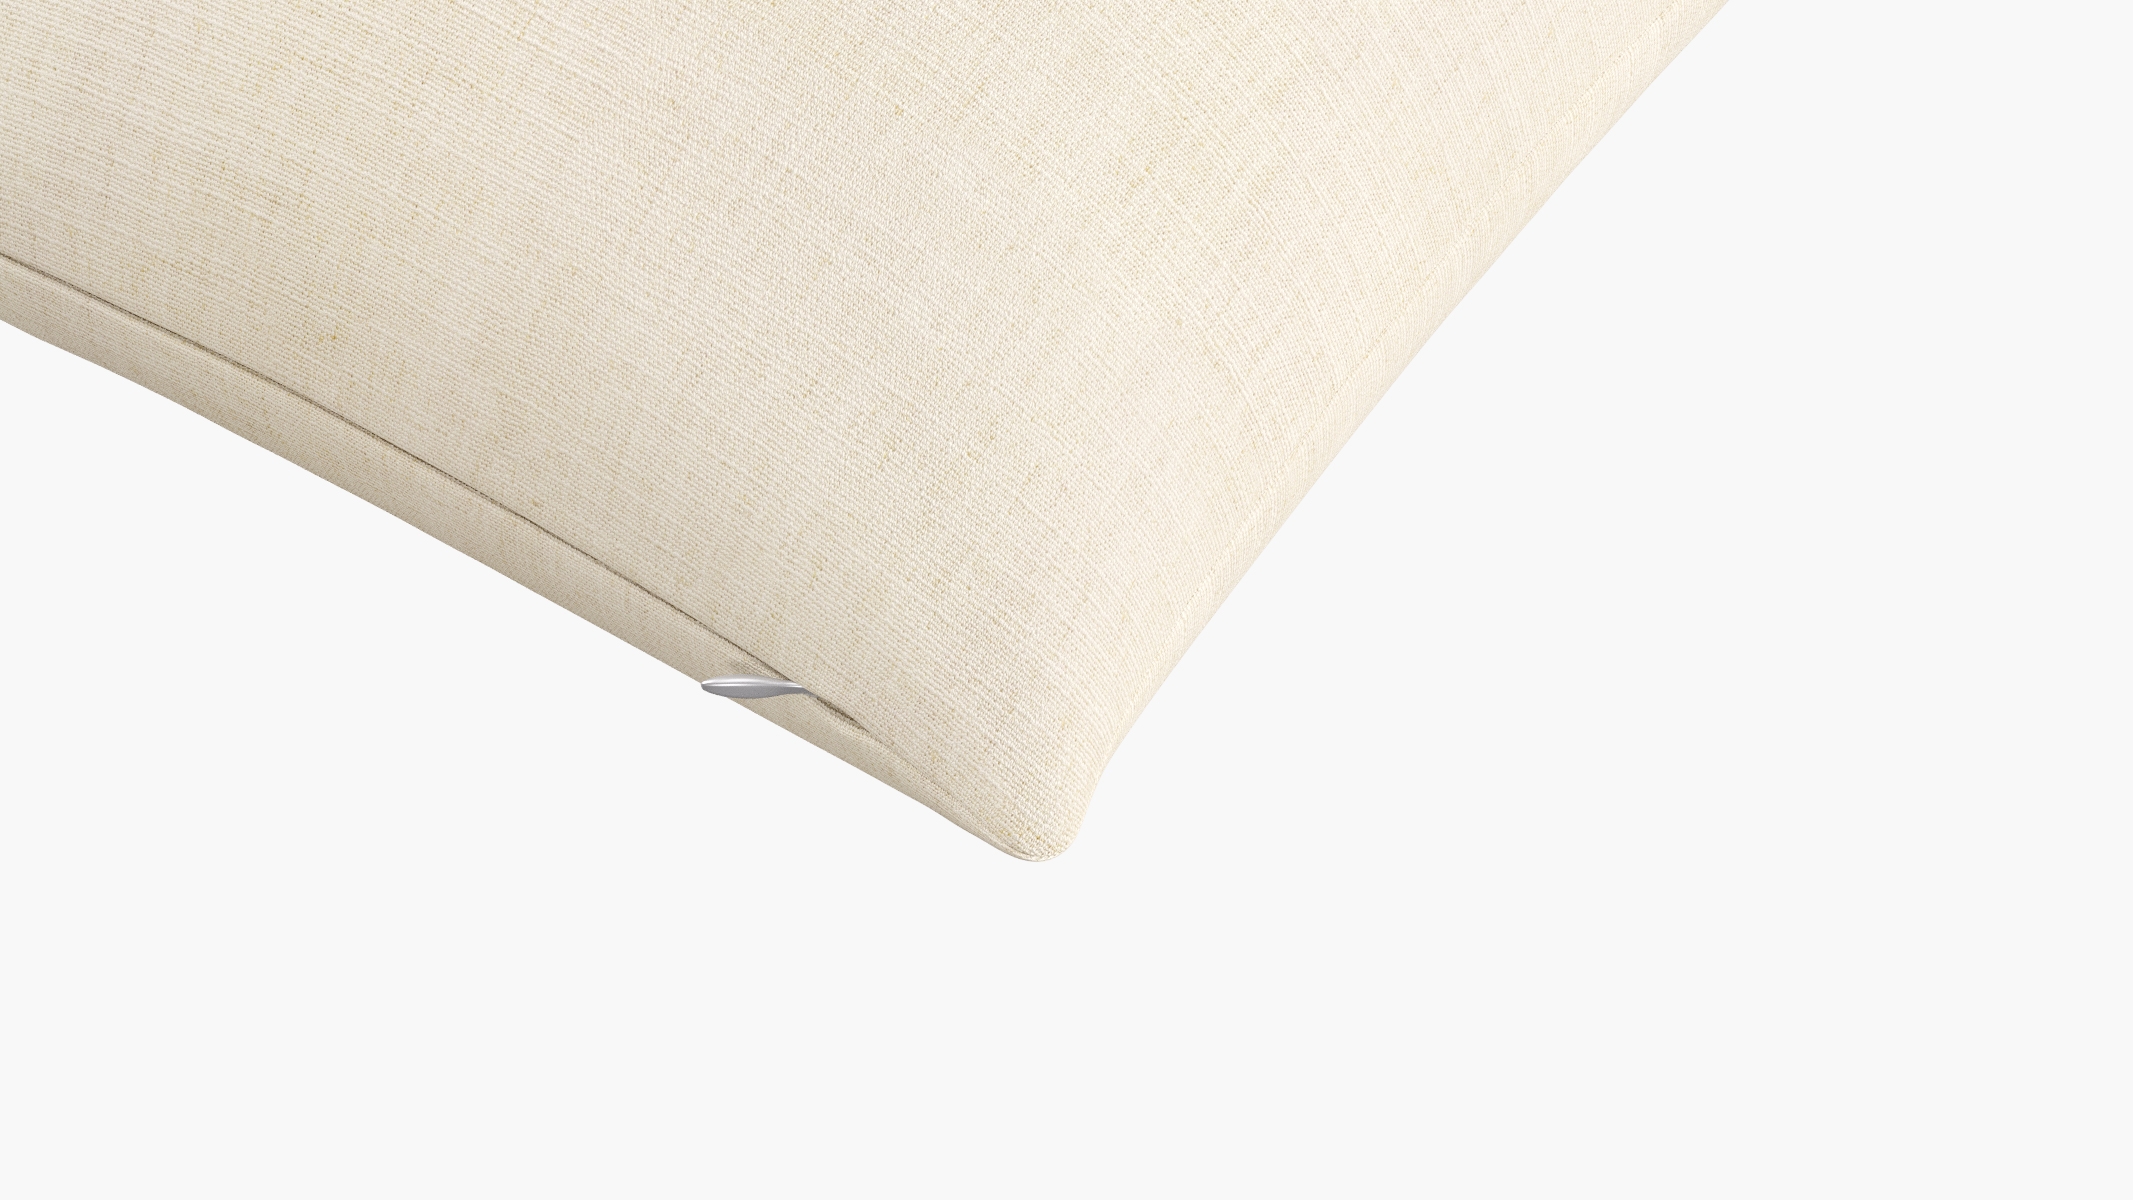 Throw Pillow 20", Talc Everyday Linen, 20" x 20" - Image 1